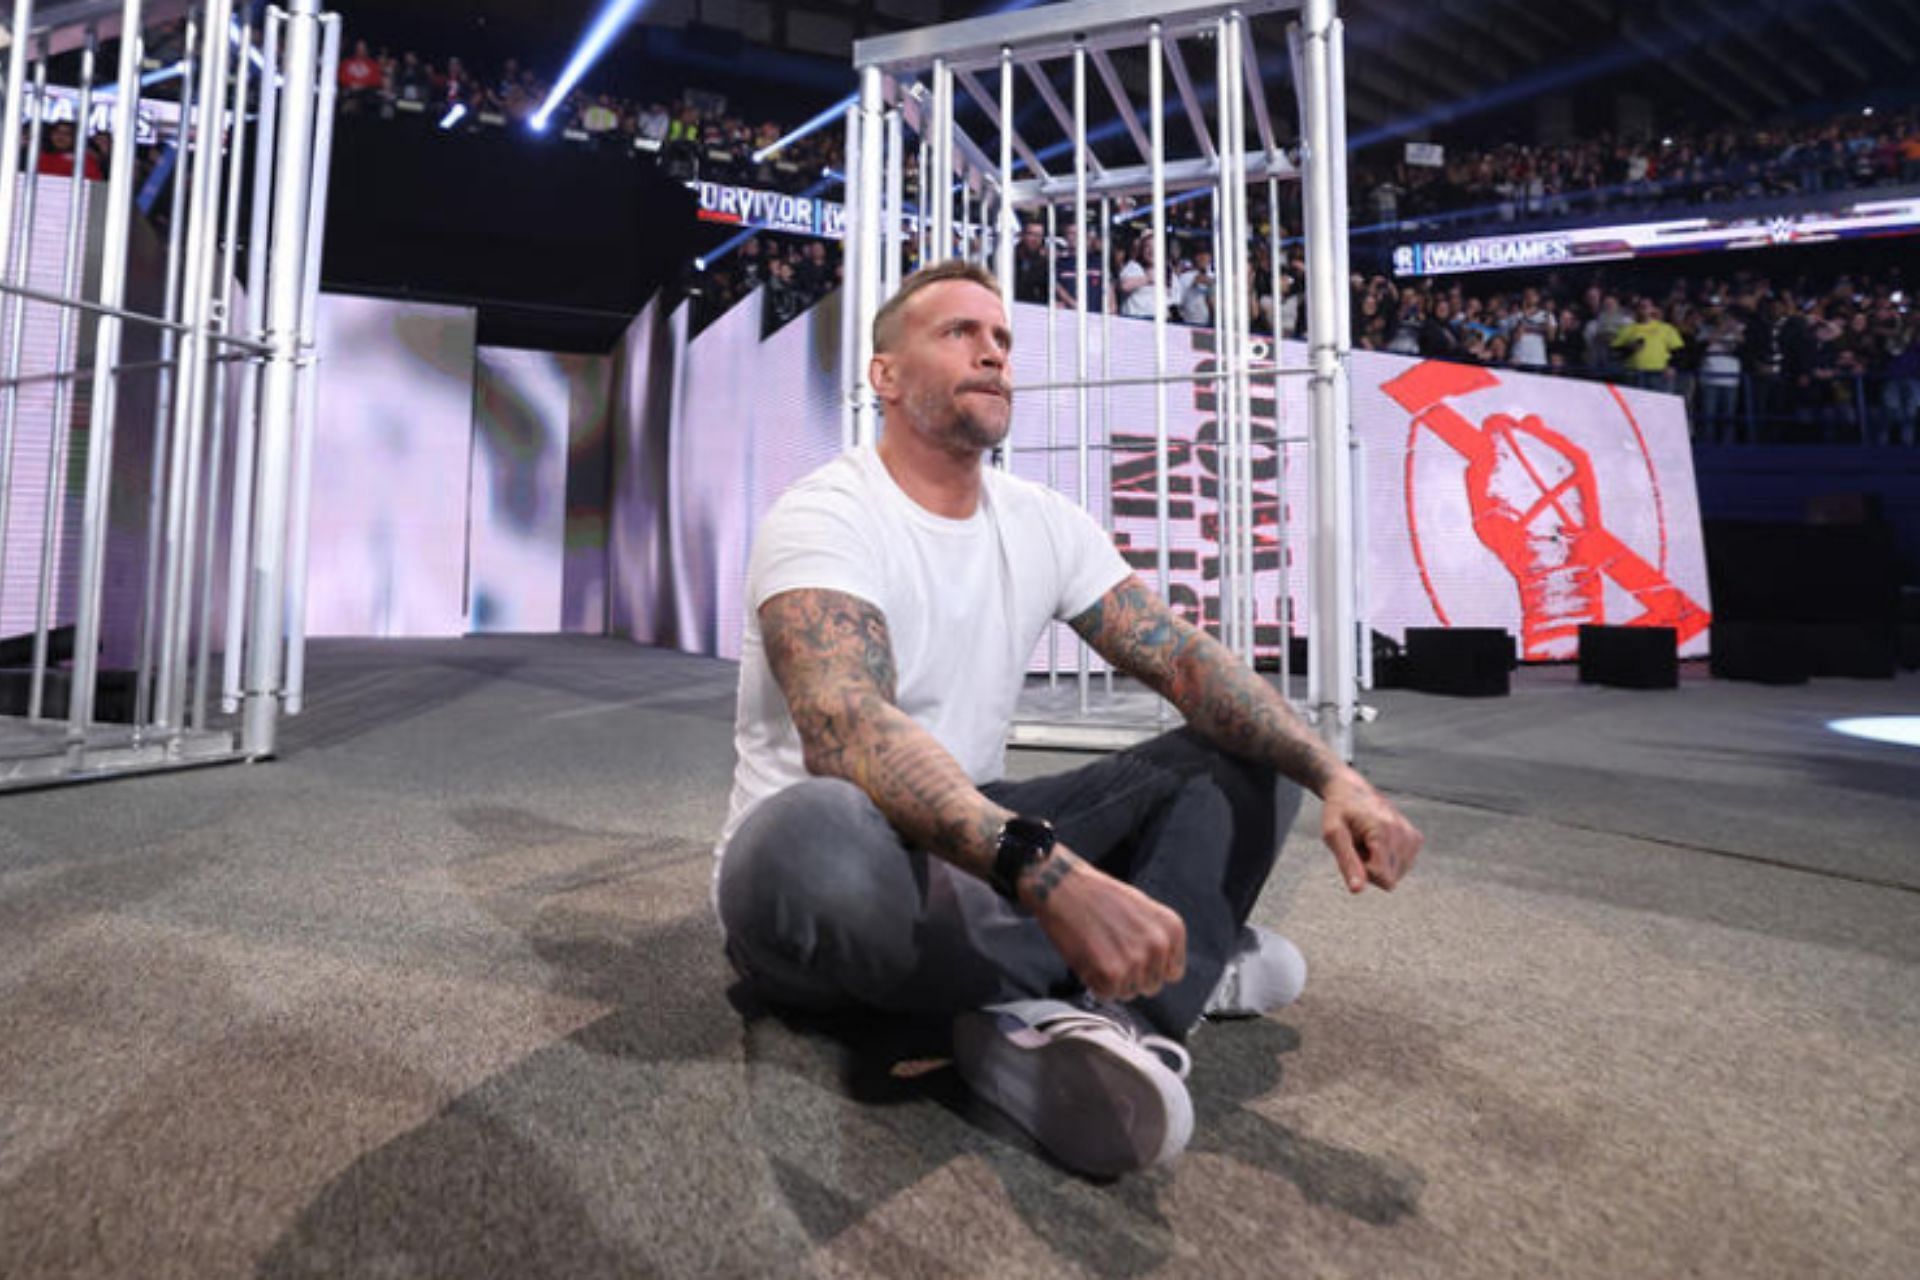 CM Punk spoke out about WWE